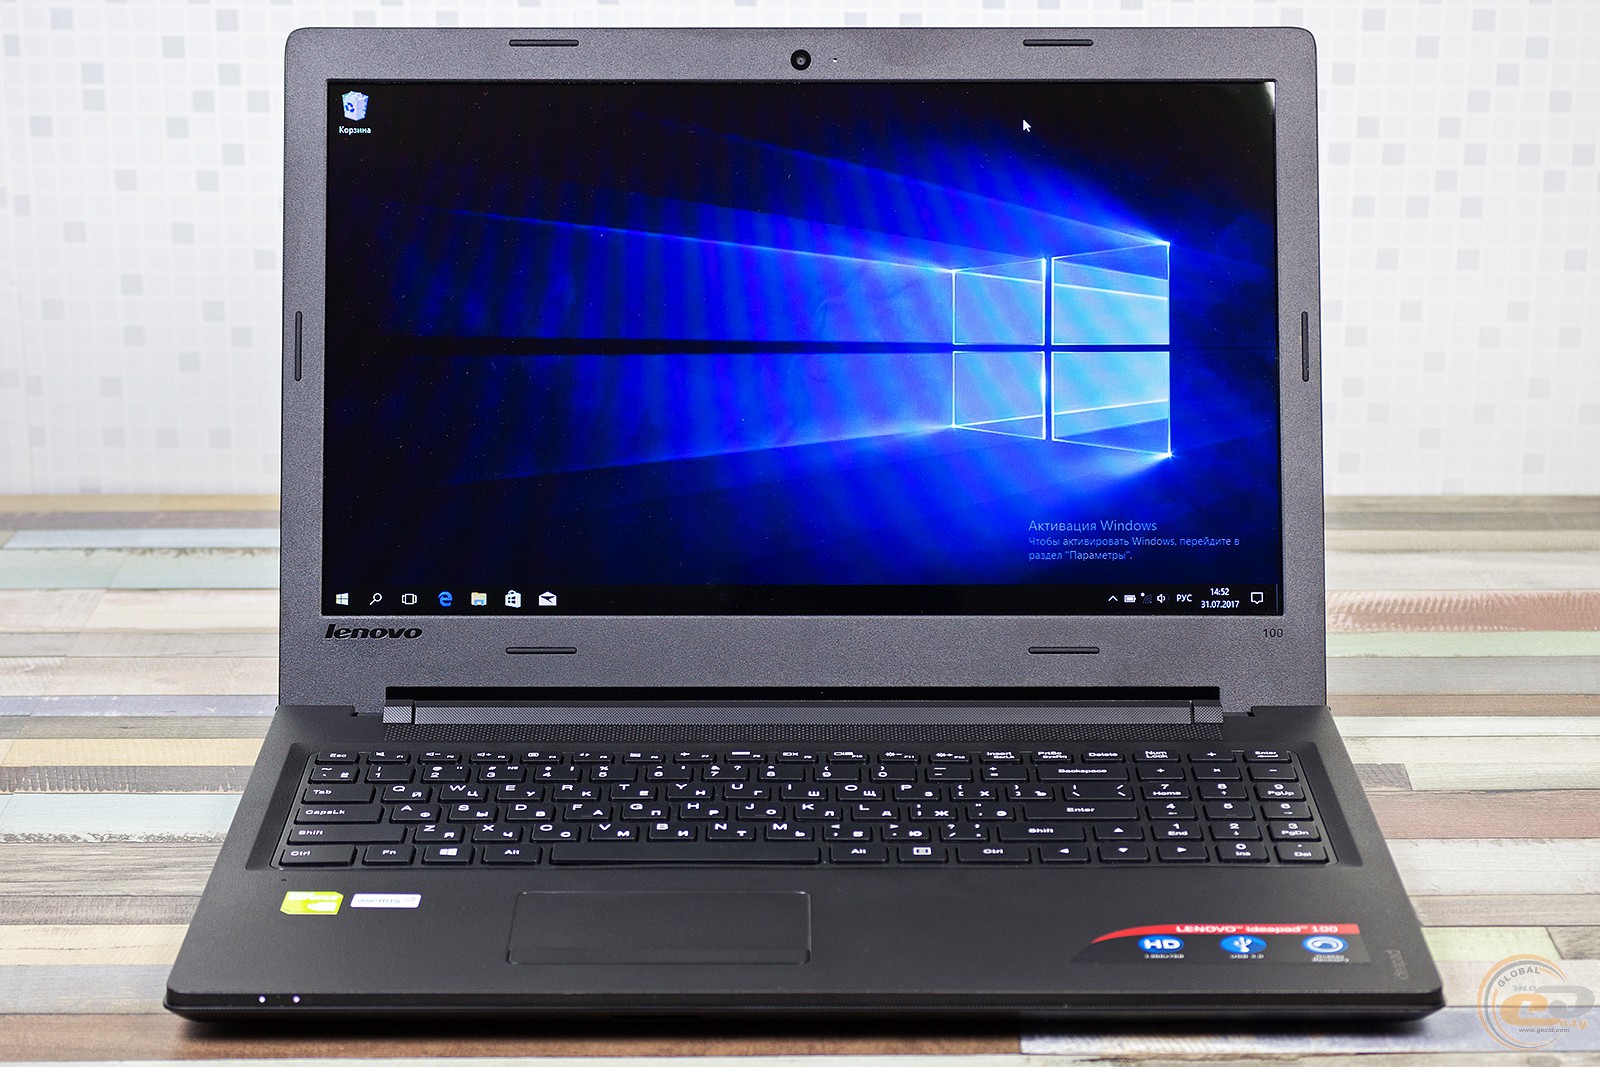 Купить Ноутбук Lenovo Ideapad 100-151bd